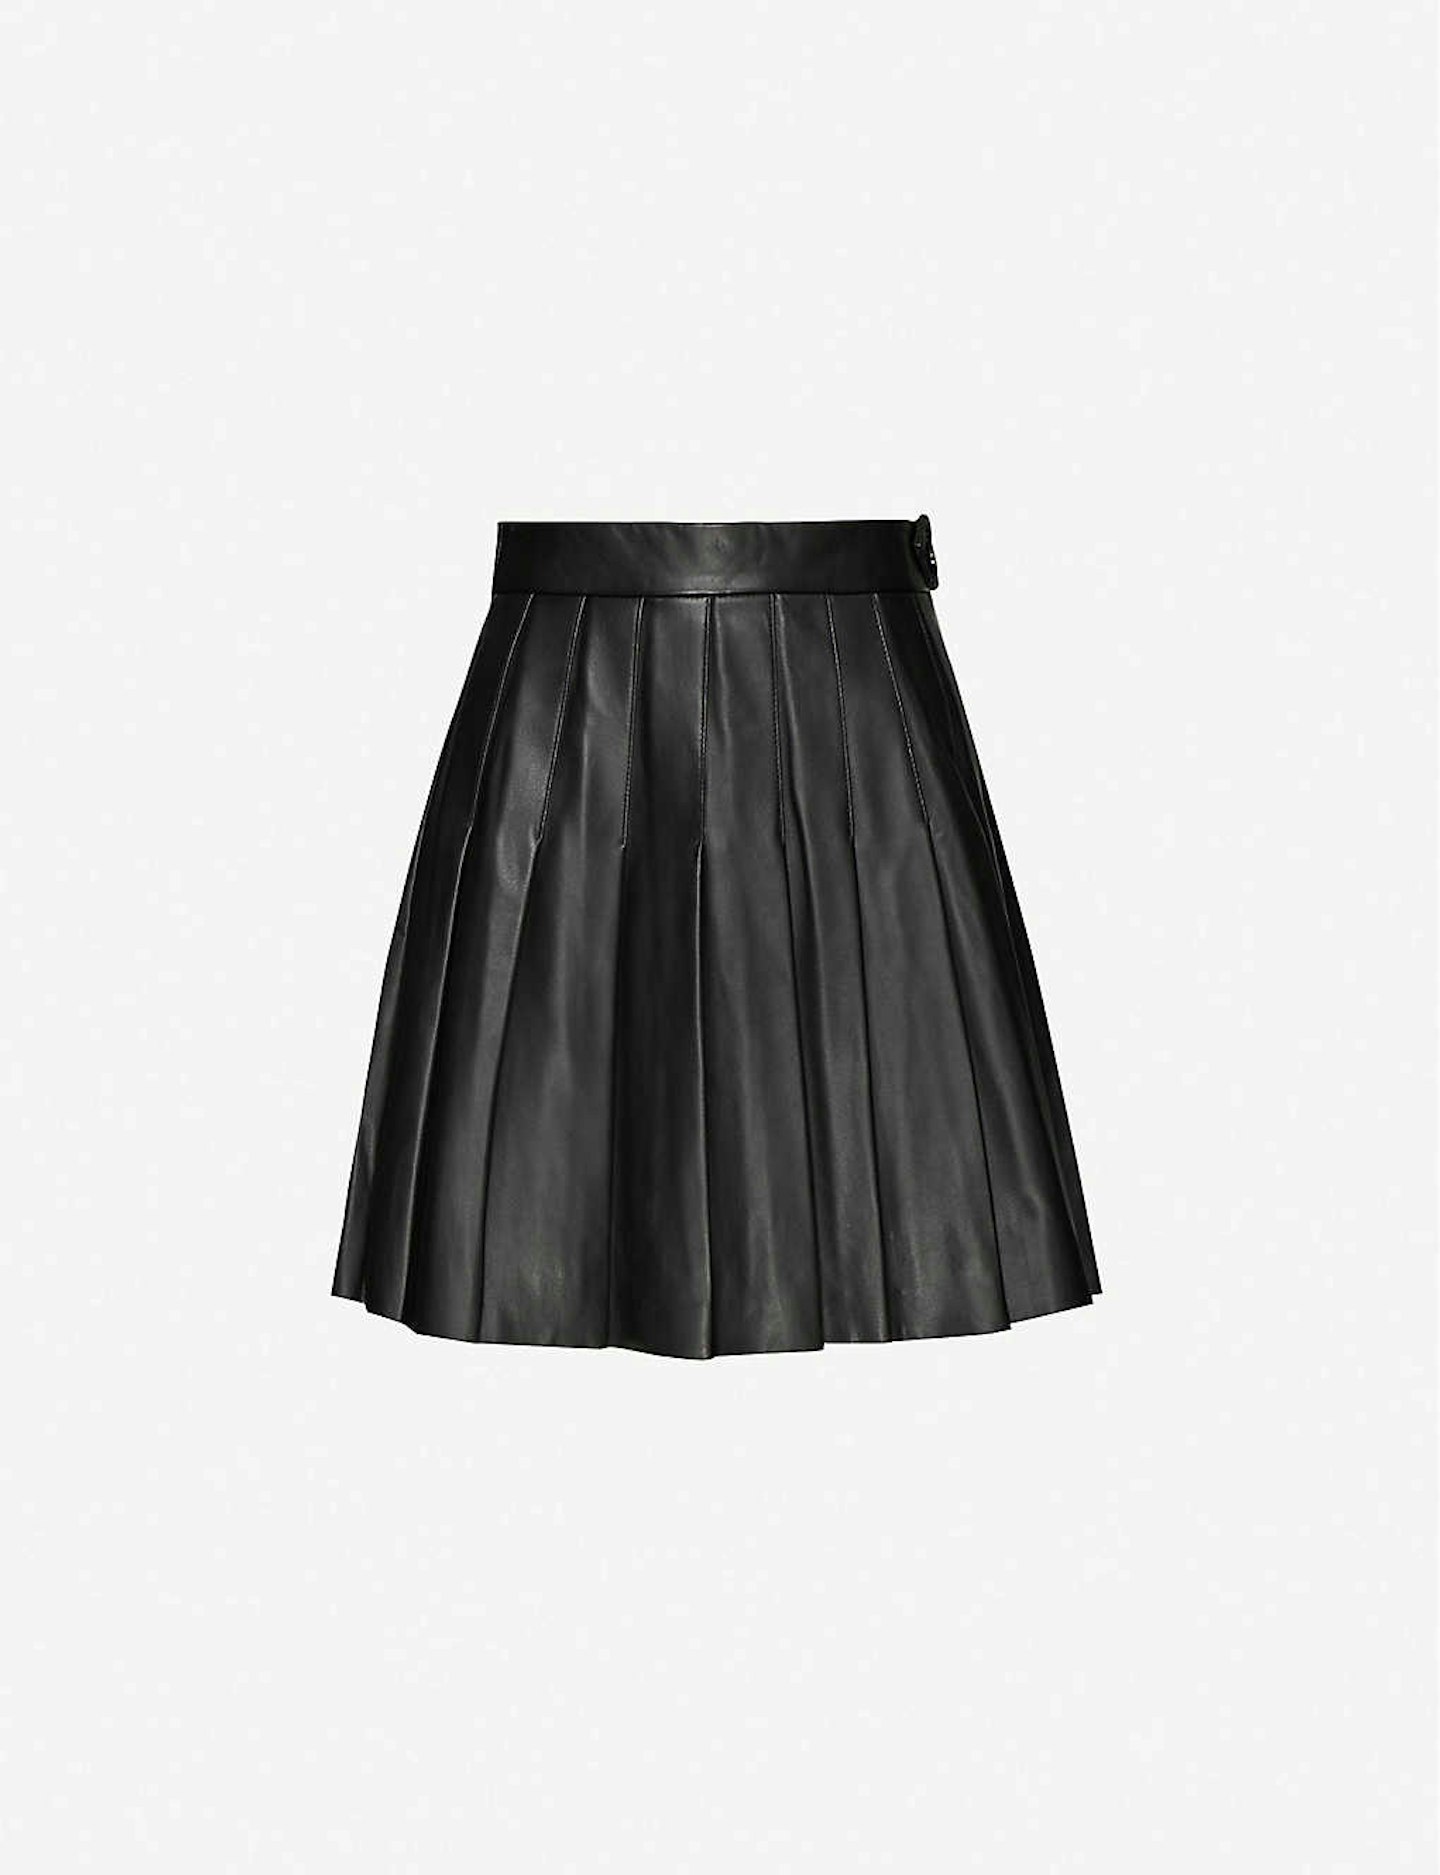 MAJE, Jabaki pleated leather mini skirt, £370